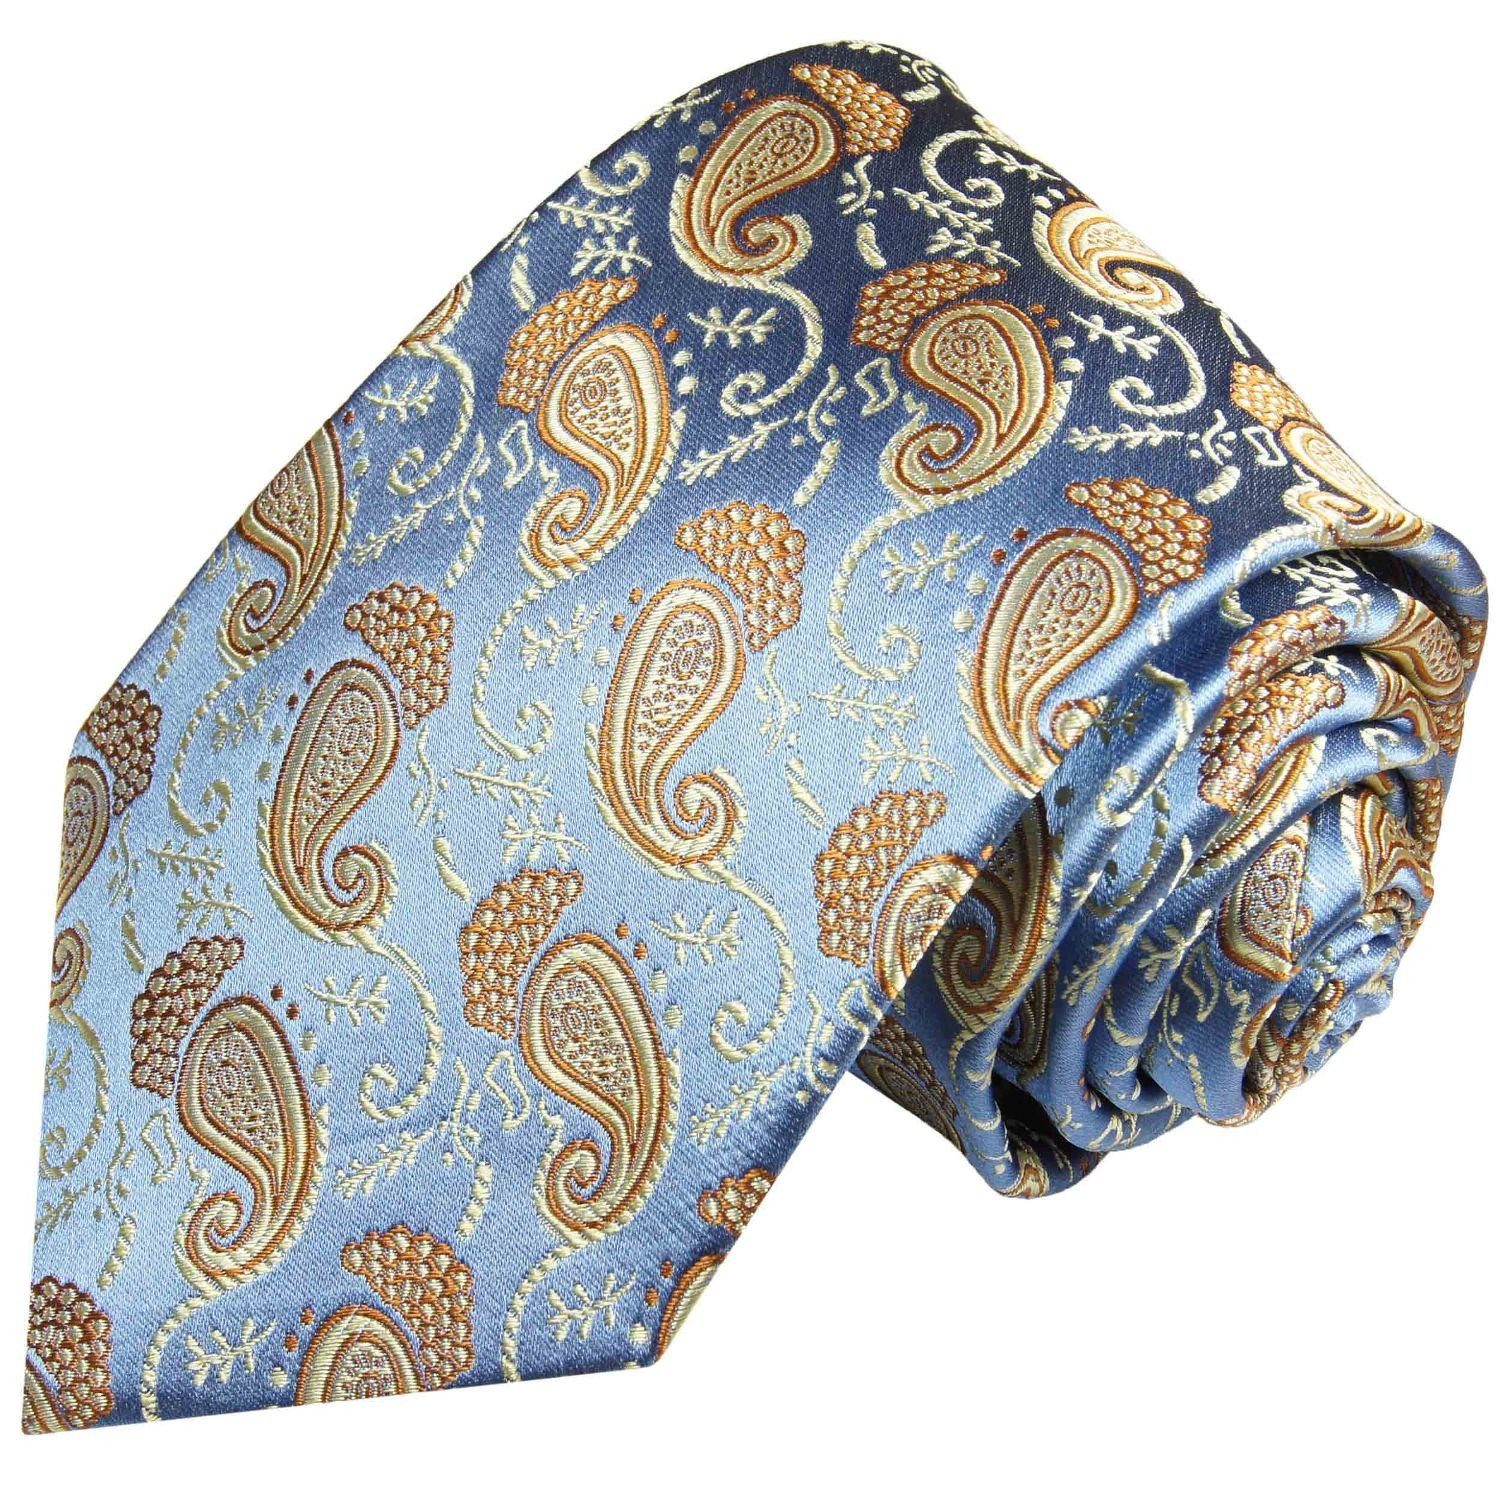 Paul Malone Krawatte Elegante Seidenkrawatte Herren Schlips paisley brokat 100% Seide Breit (8cm), blau gold 351